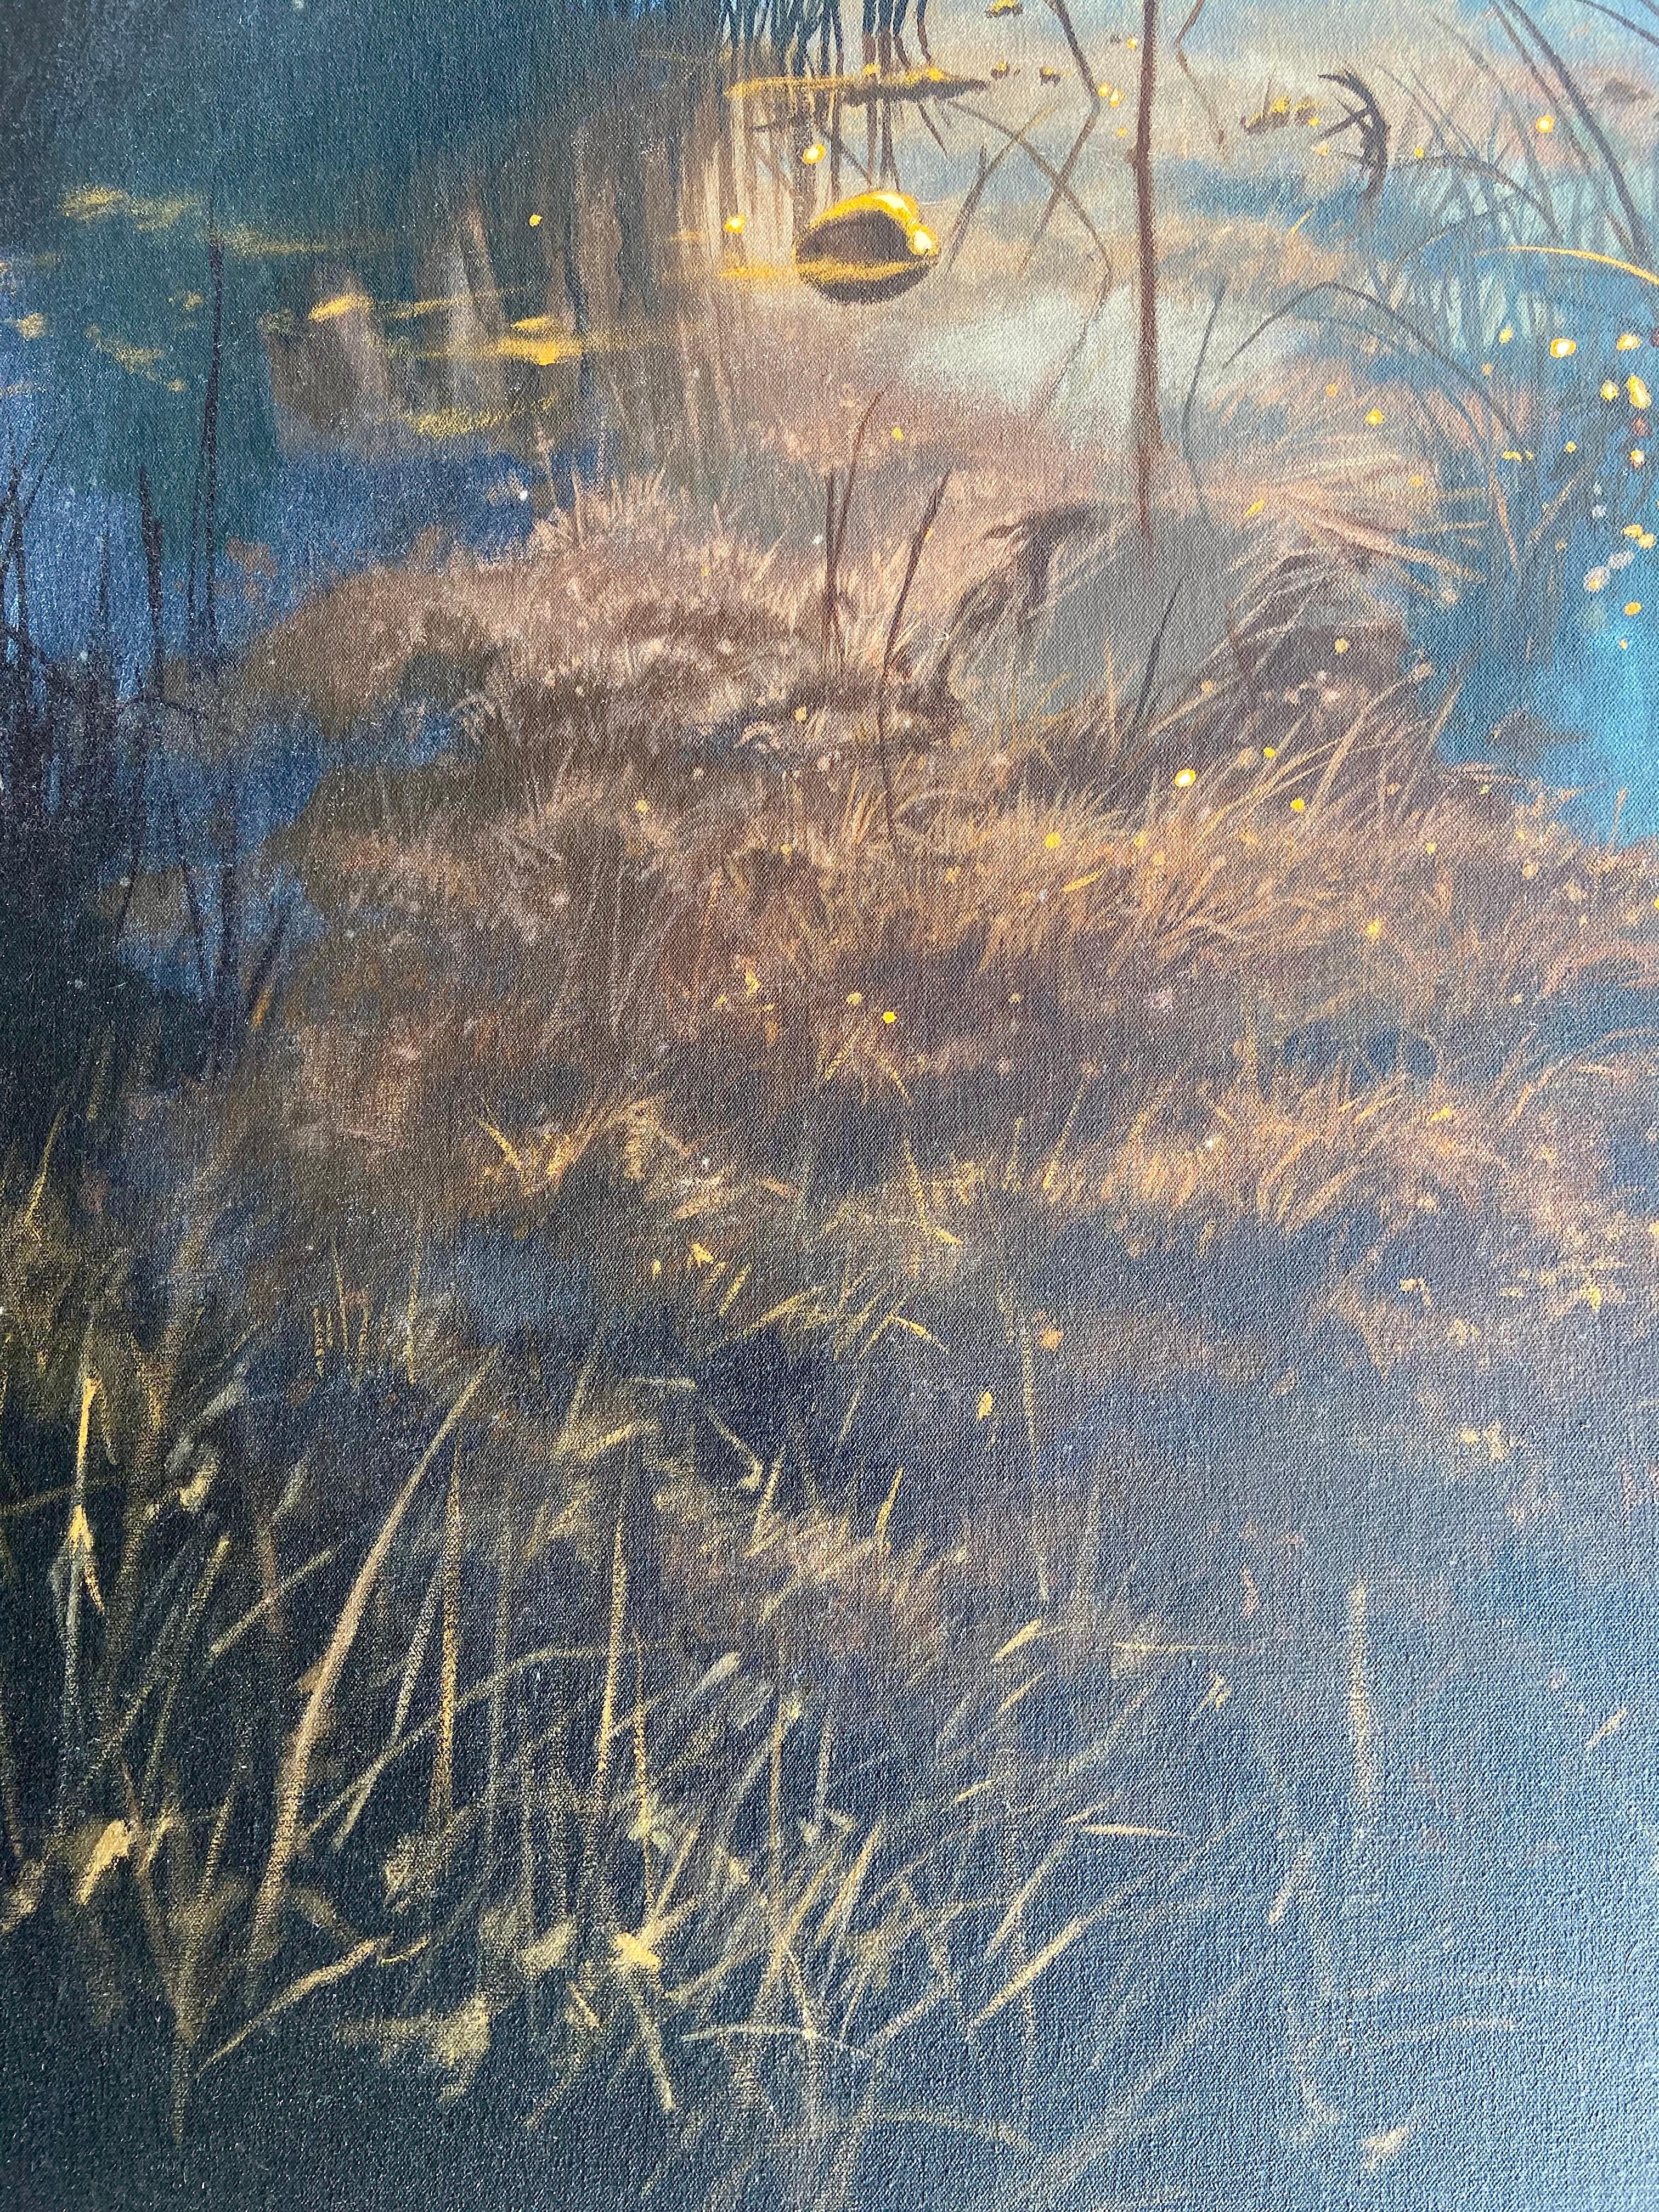 Georgica Pond at Sunset (East Hampton, New York) - Photorealist Painting by Ian Hornak